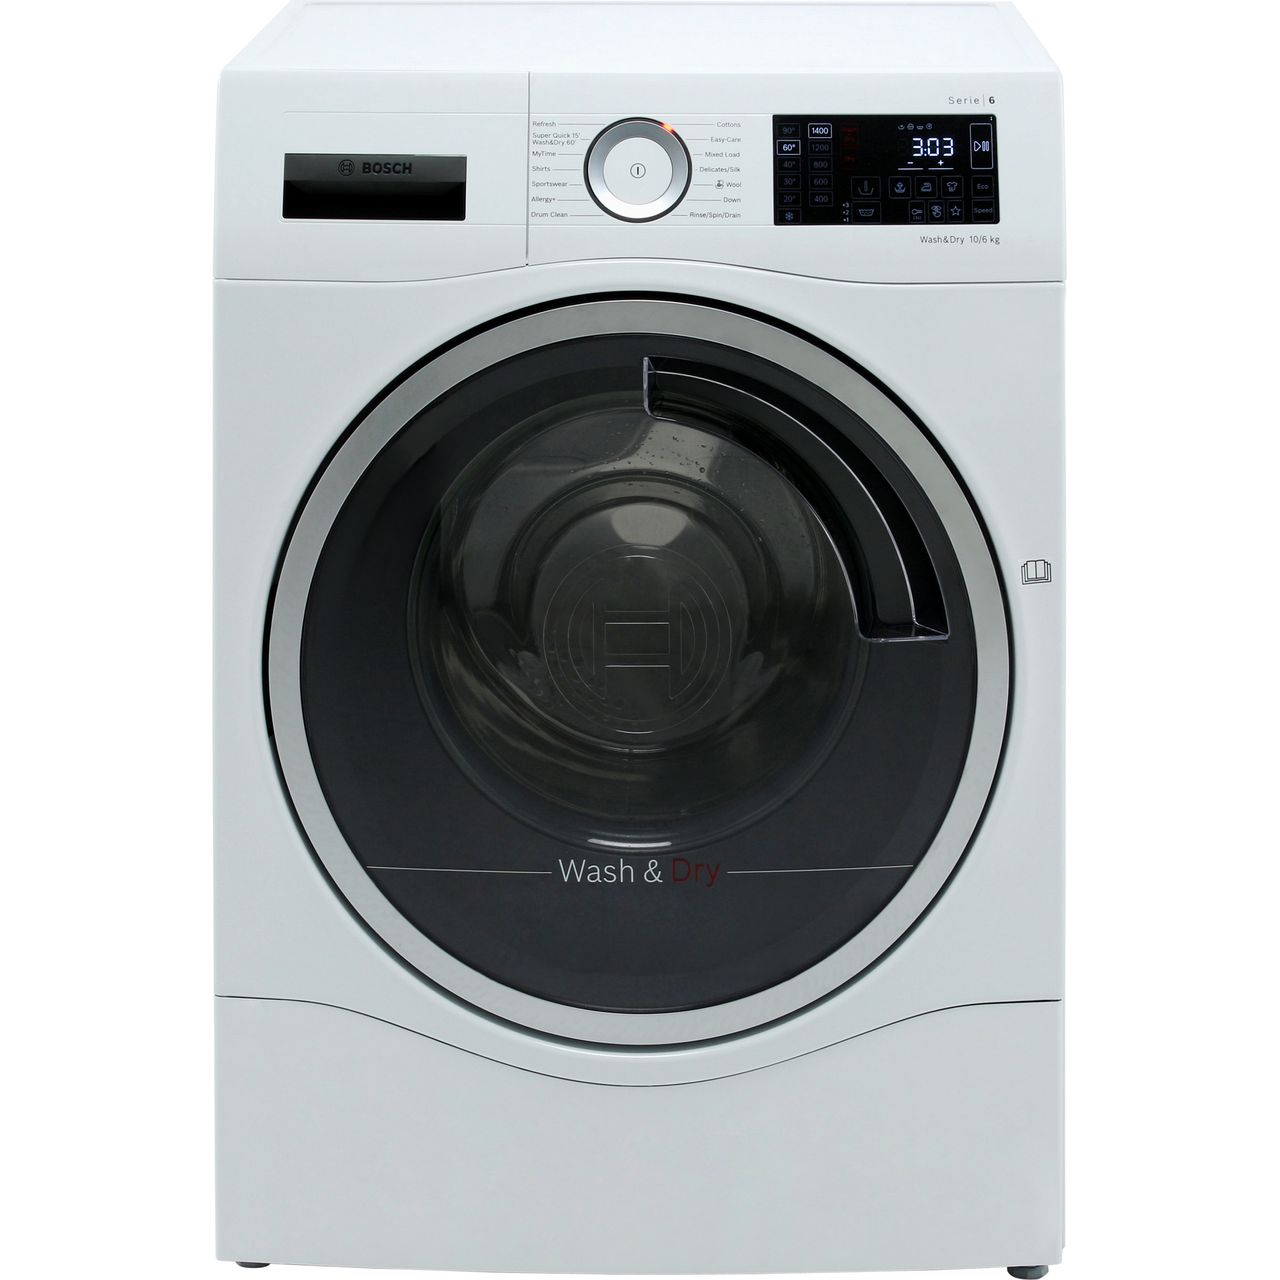 Wdu28560gb Wh Bosch Washer Dryer 10kg Ao Com